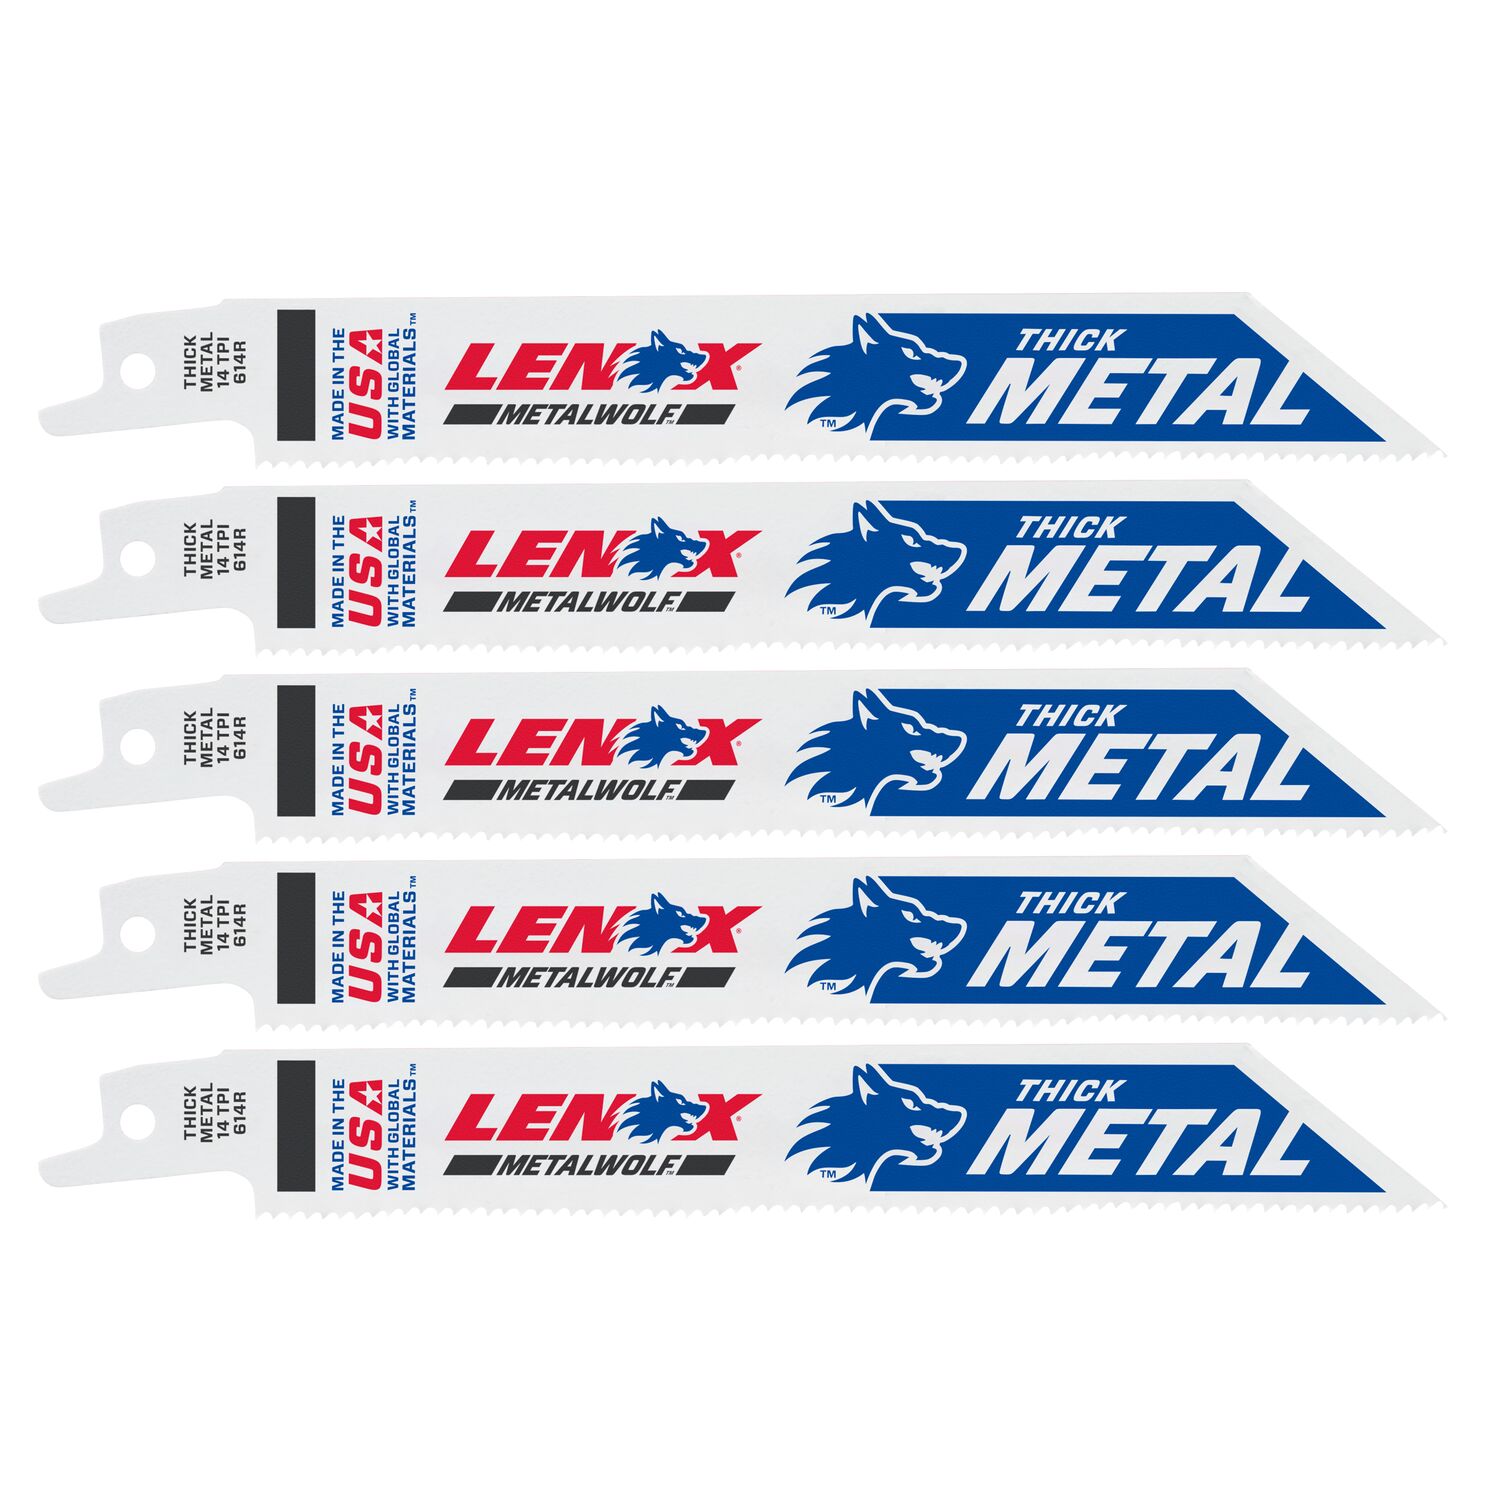 Lenox 2014212 4 8tpi Lazer Reciprocating Saw Blade